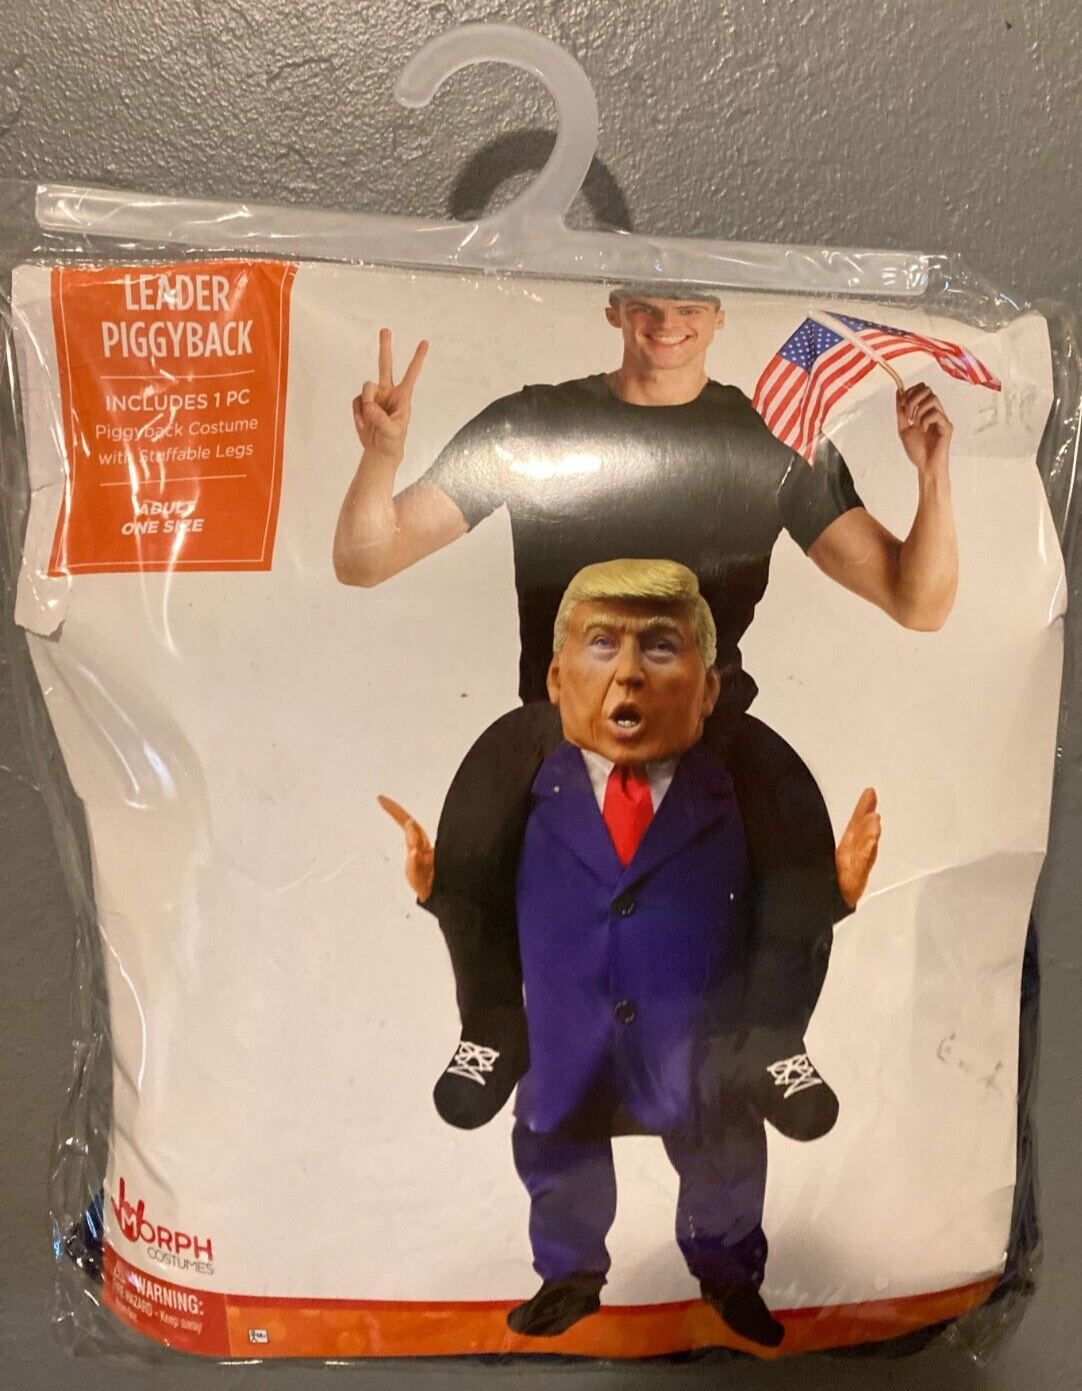 Leader Piggyback Halloween Costume Riding Donald Trump Shoulders - Adult Costume Morph Costumes